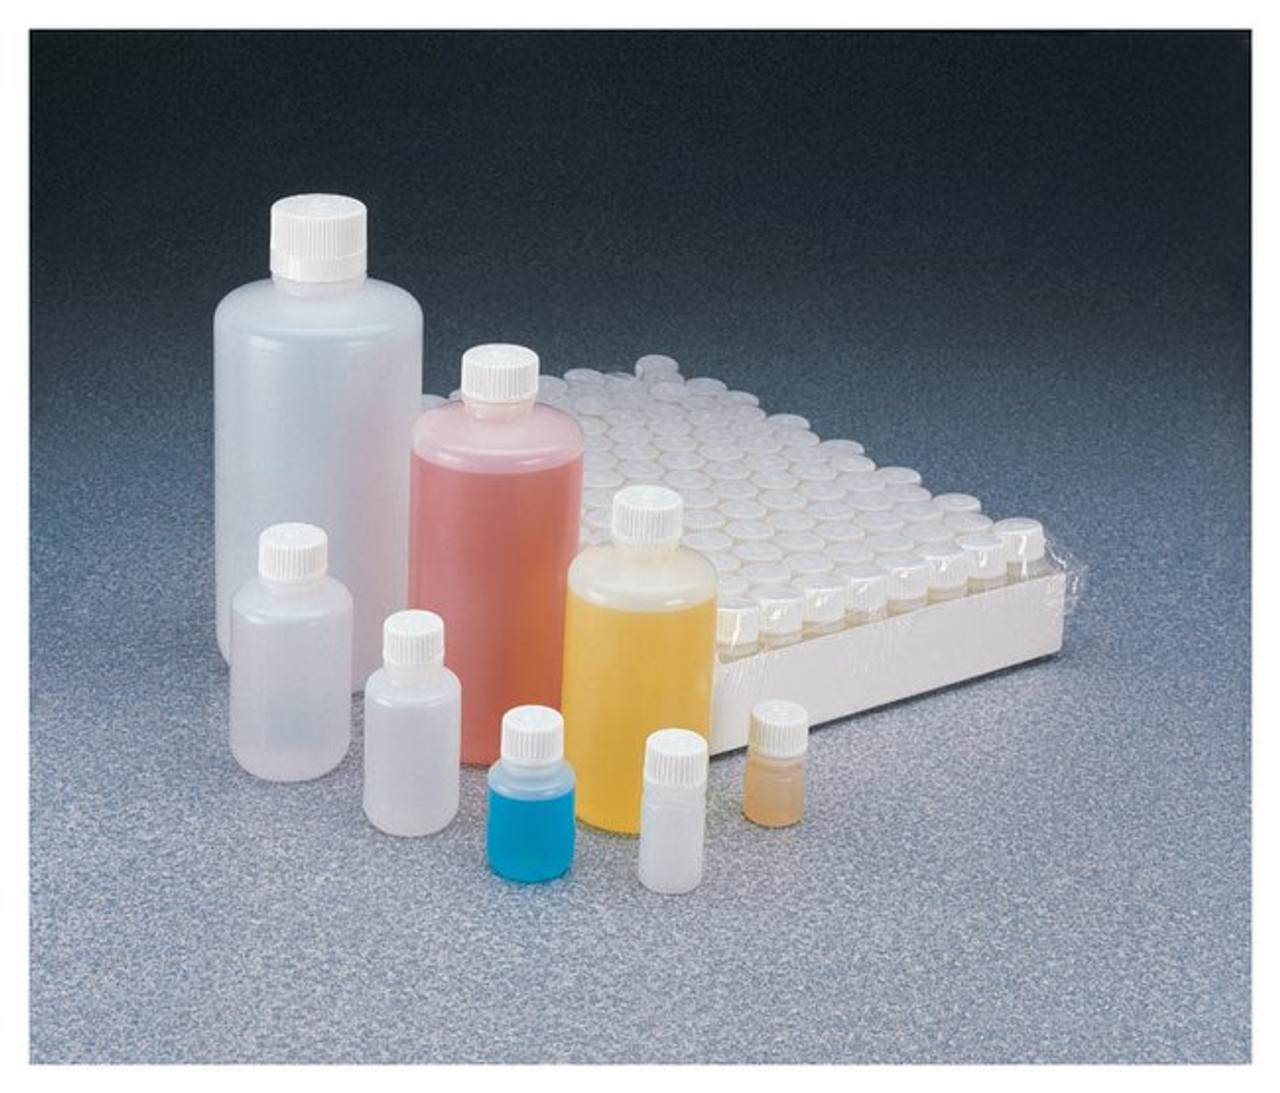 Nalgene® 342089-0002 2oz HDPE, Sterile Bottles with Polypropylene